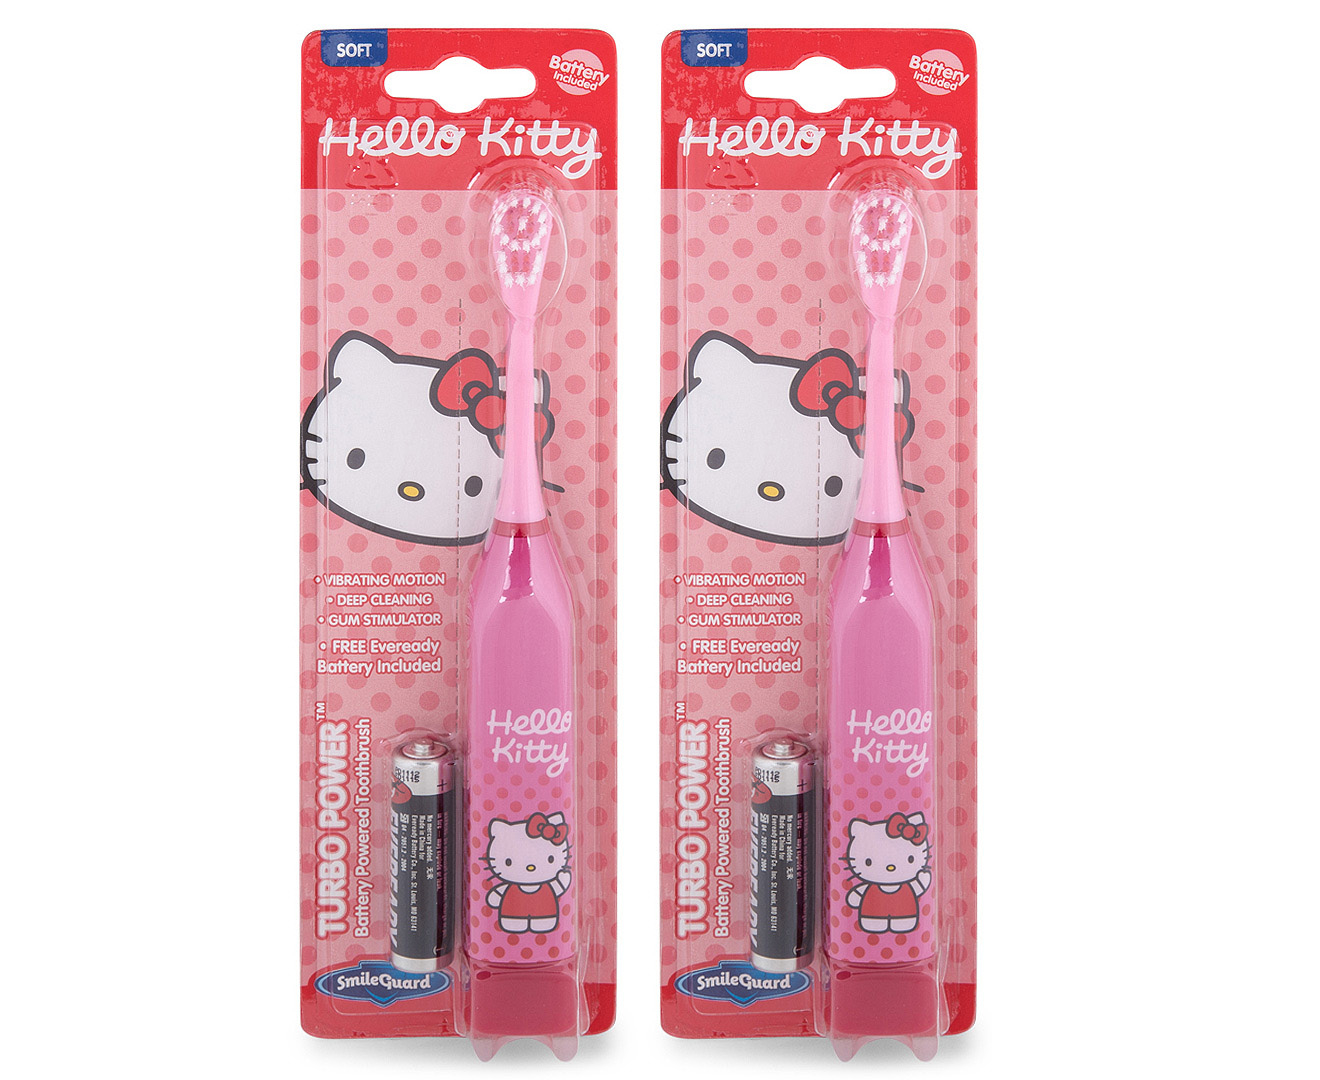 2 x Hello Kitty Turbo Power Toothbrush - Pink